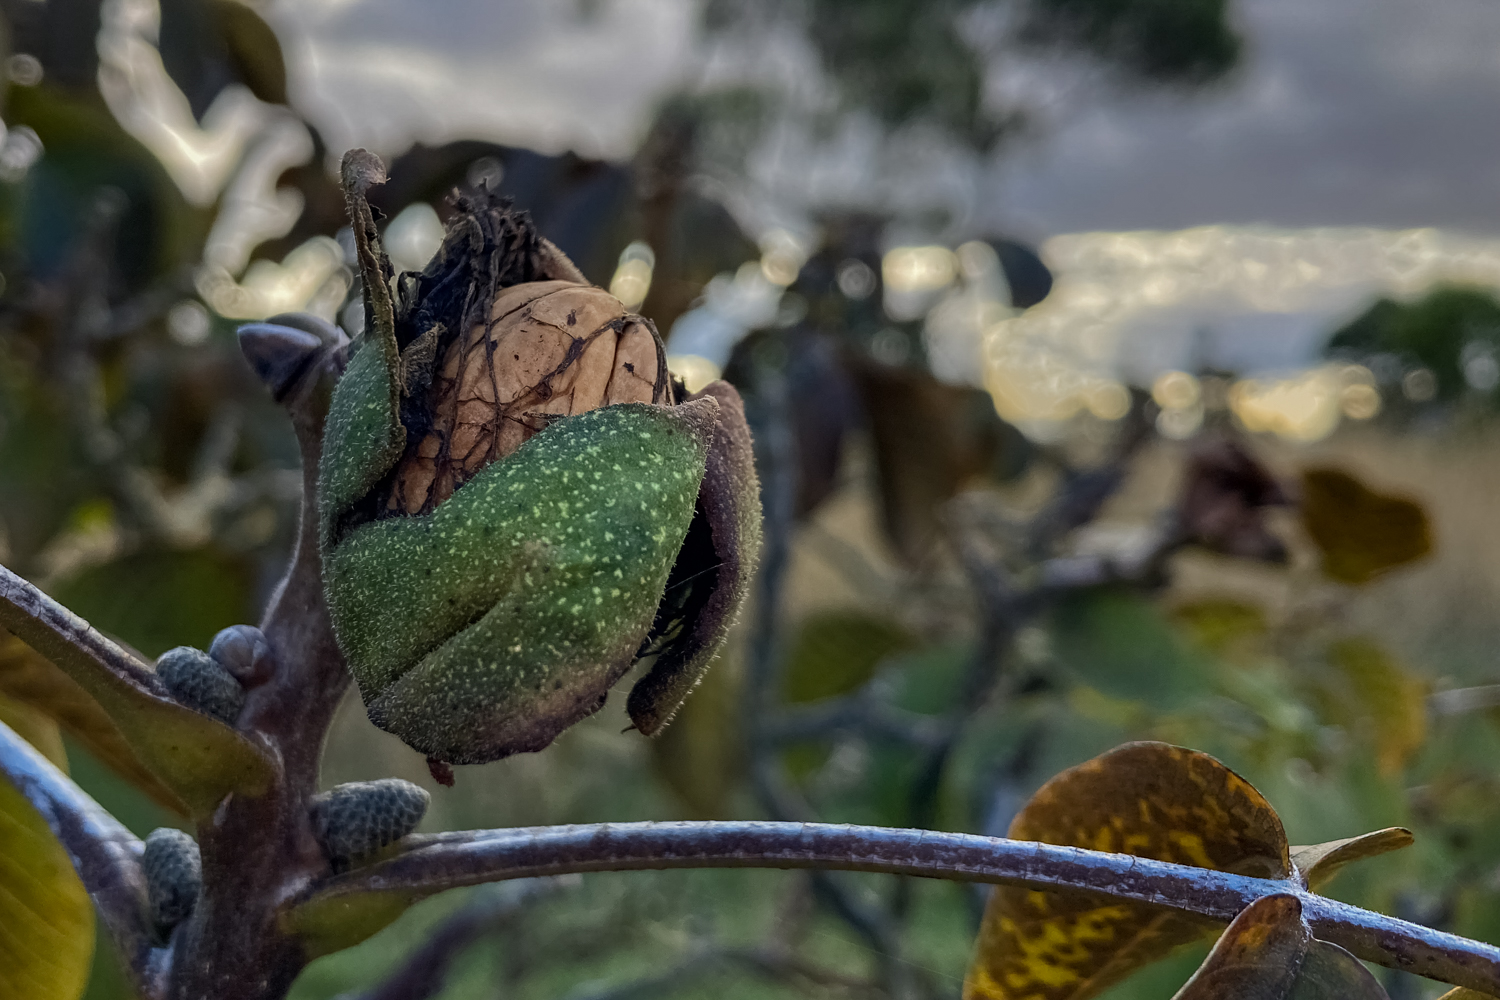 A walnut in a green husk on a tree branch